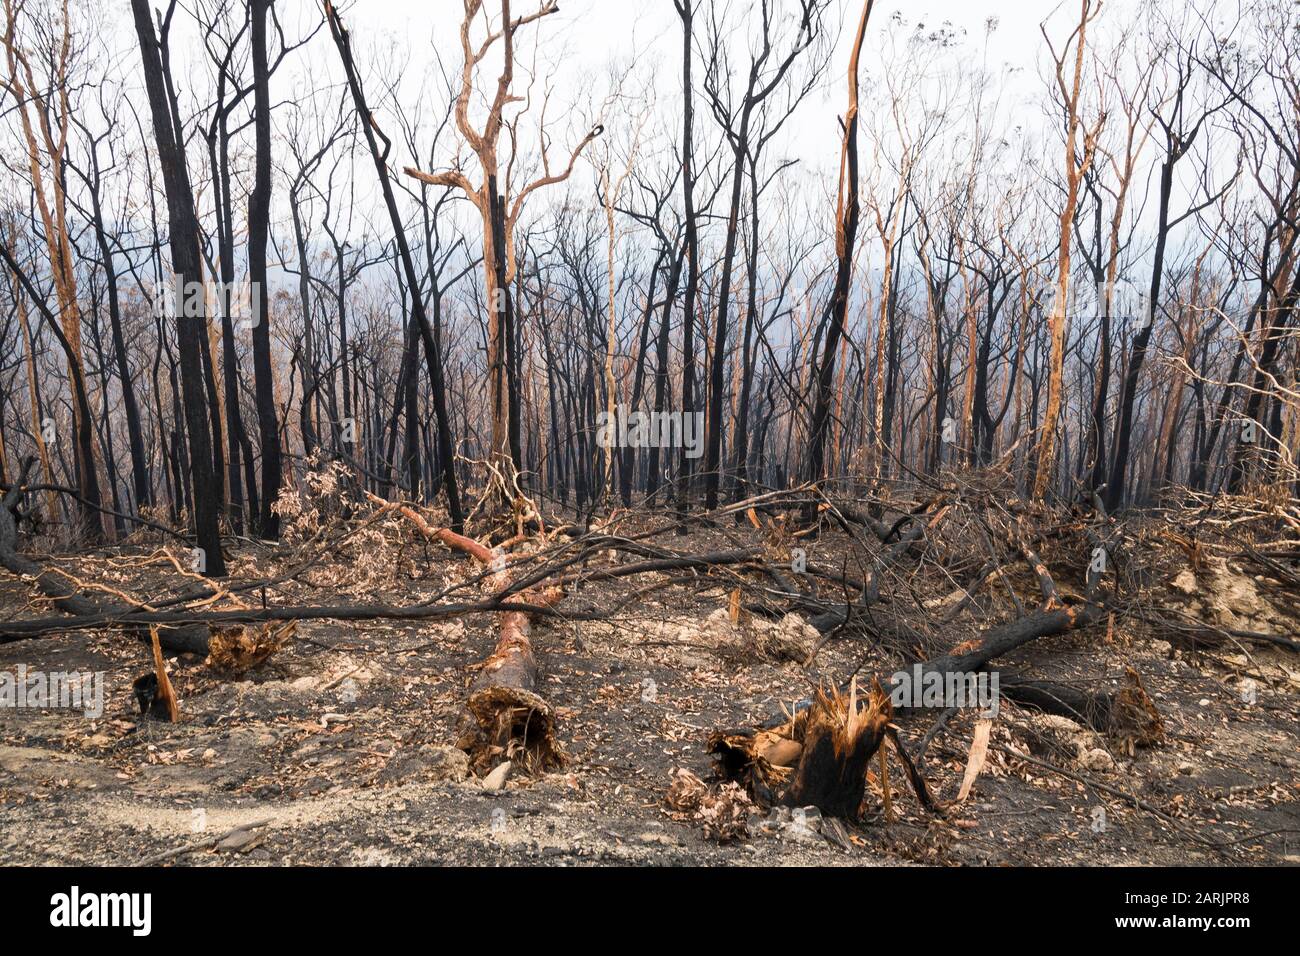 Mogo residents fleed as bushfire rages up the NSW south coast during the Australian Bushfires in 2020, Mogo, New South Wales, Australia © Hugh Peterswald/Alamy Stock Photo